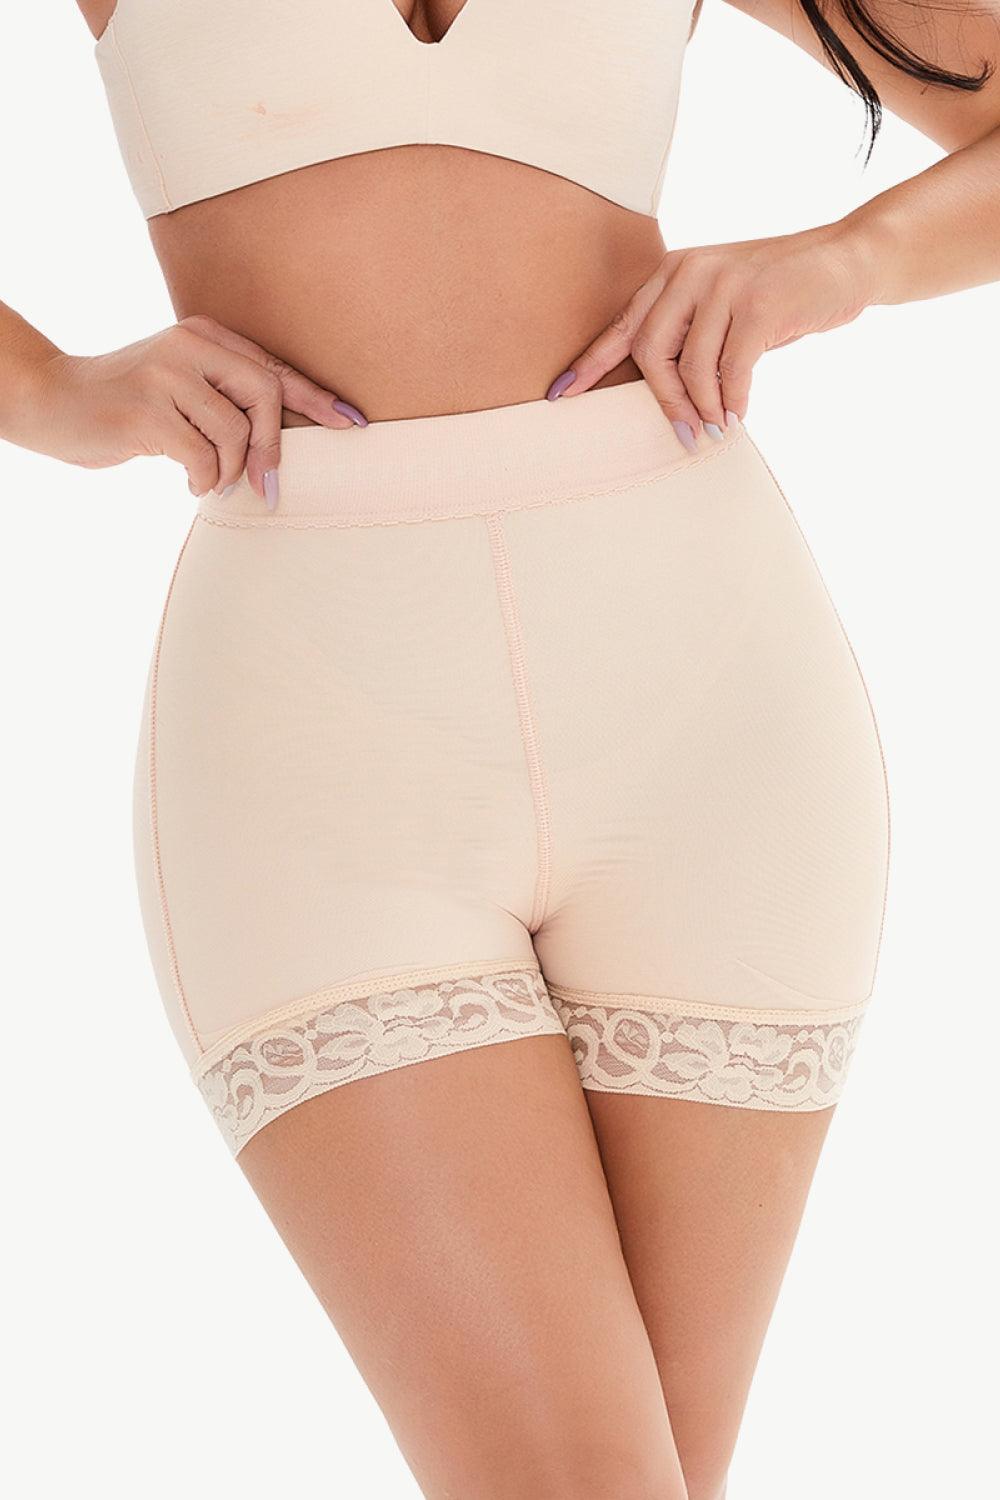 Full Size Pull-On Lace Trim Shaping Shorts - Flyclothing LLC